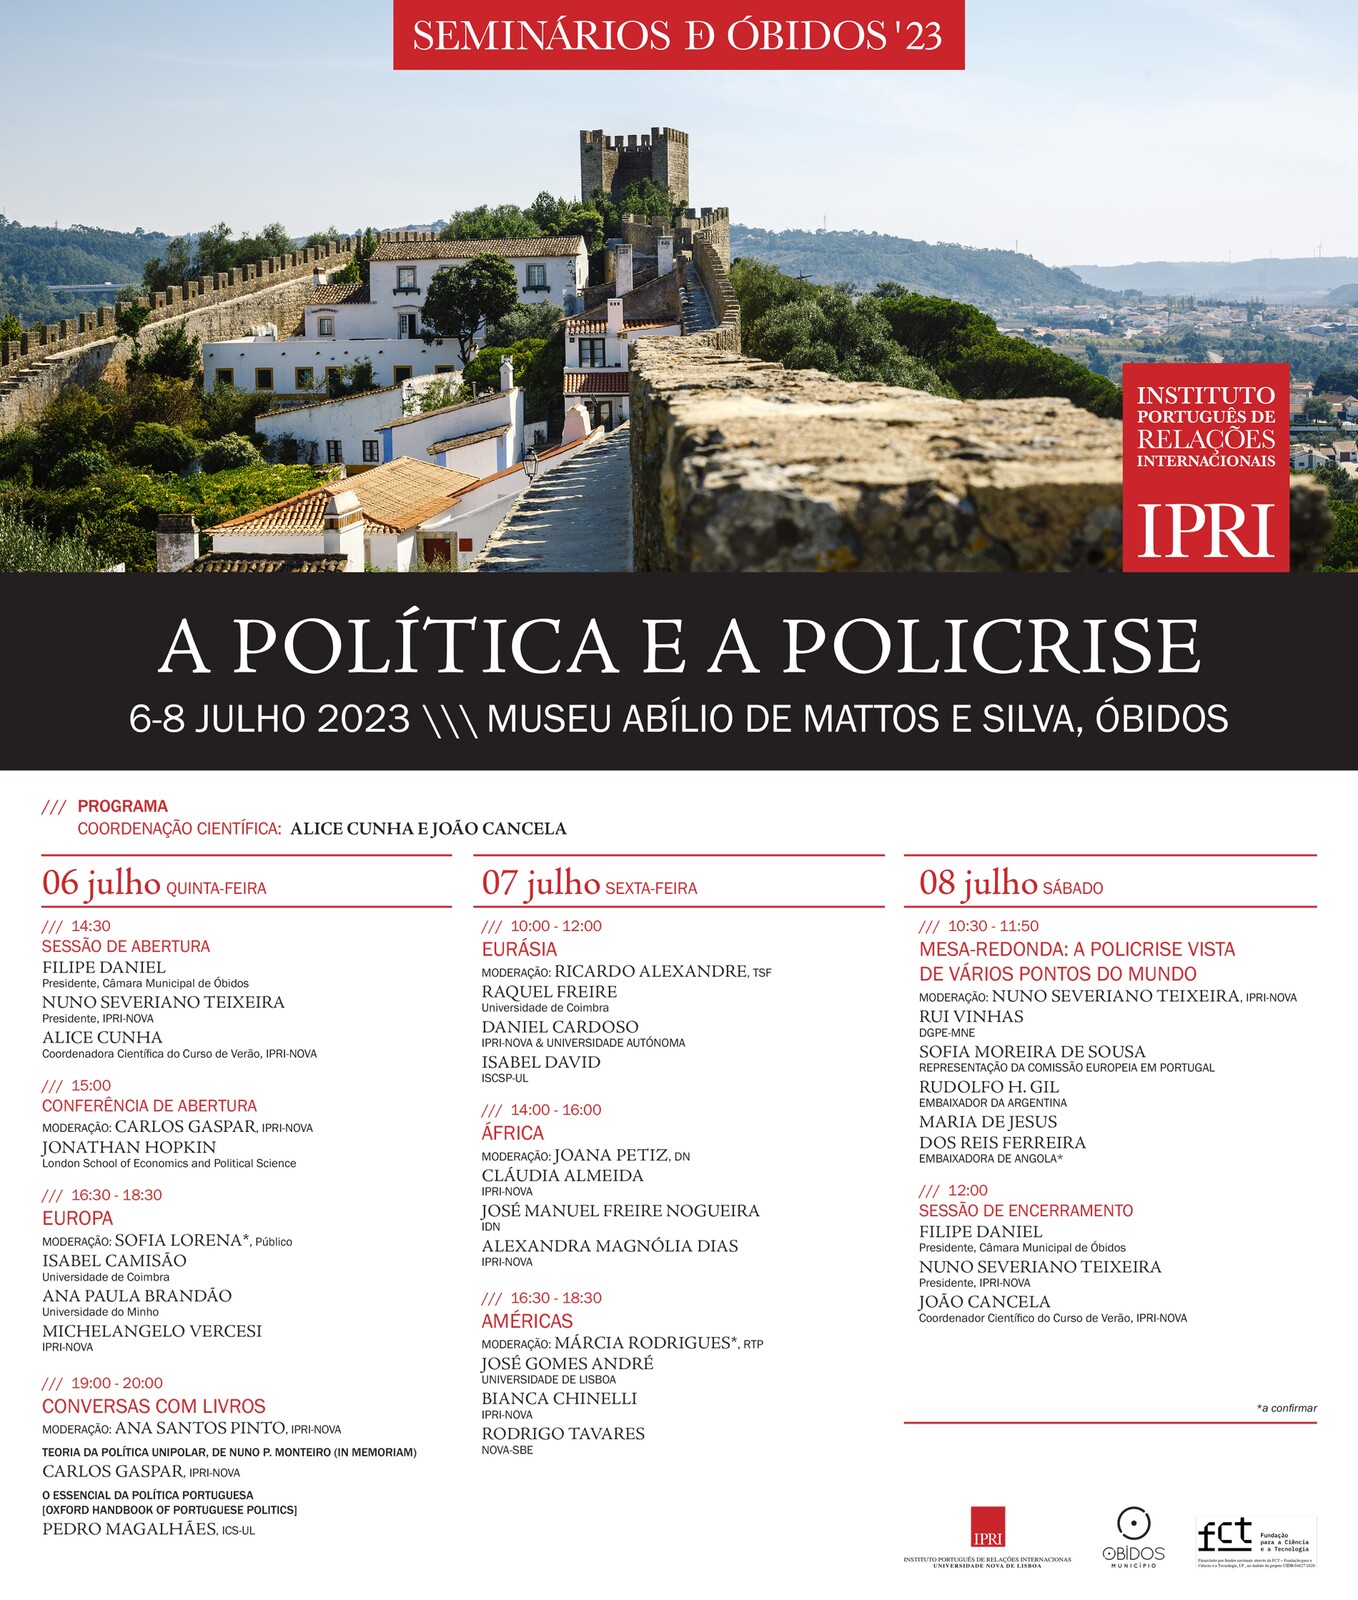 Programa - Seminários d’Obidos - IPRI-NOVA - “A Política e a Policrise”